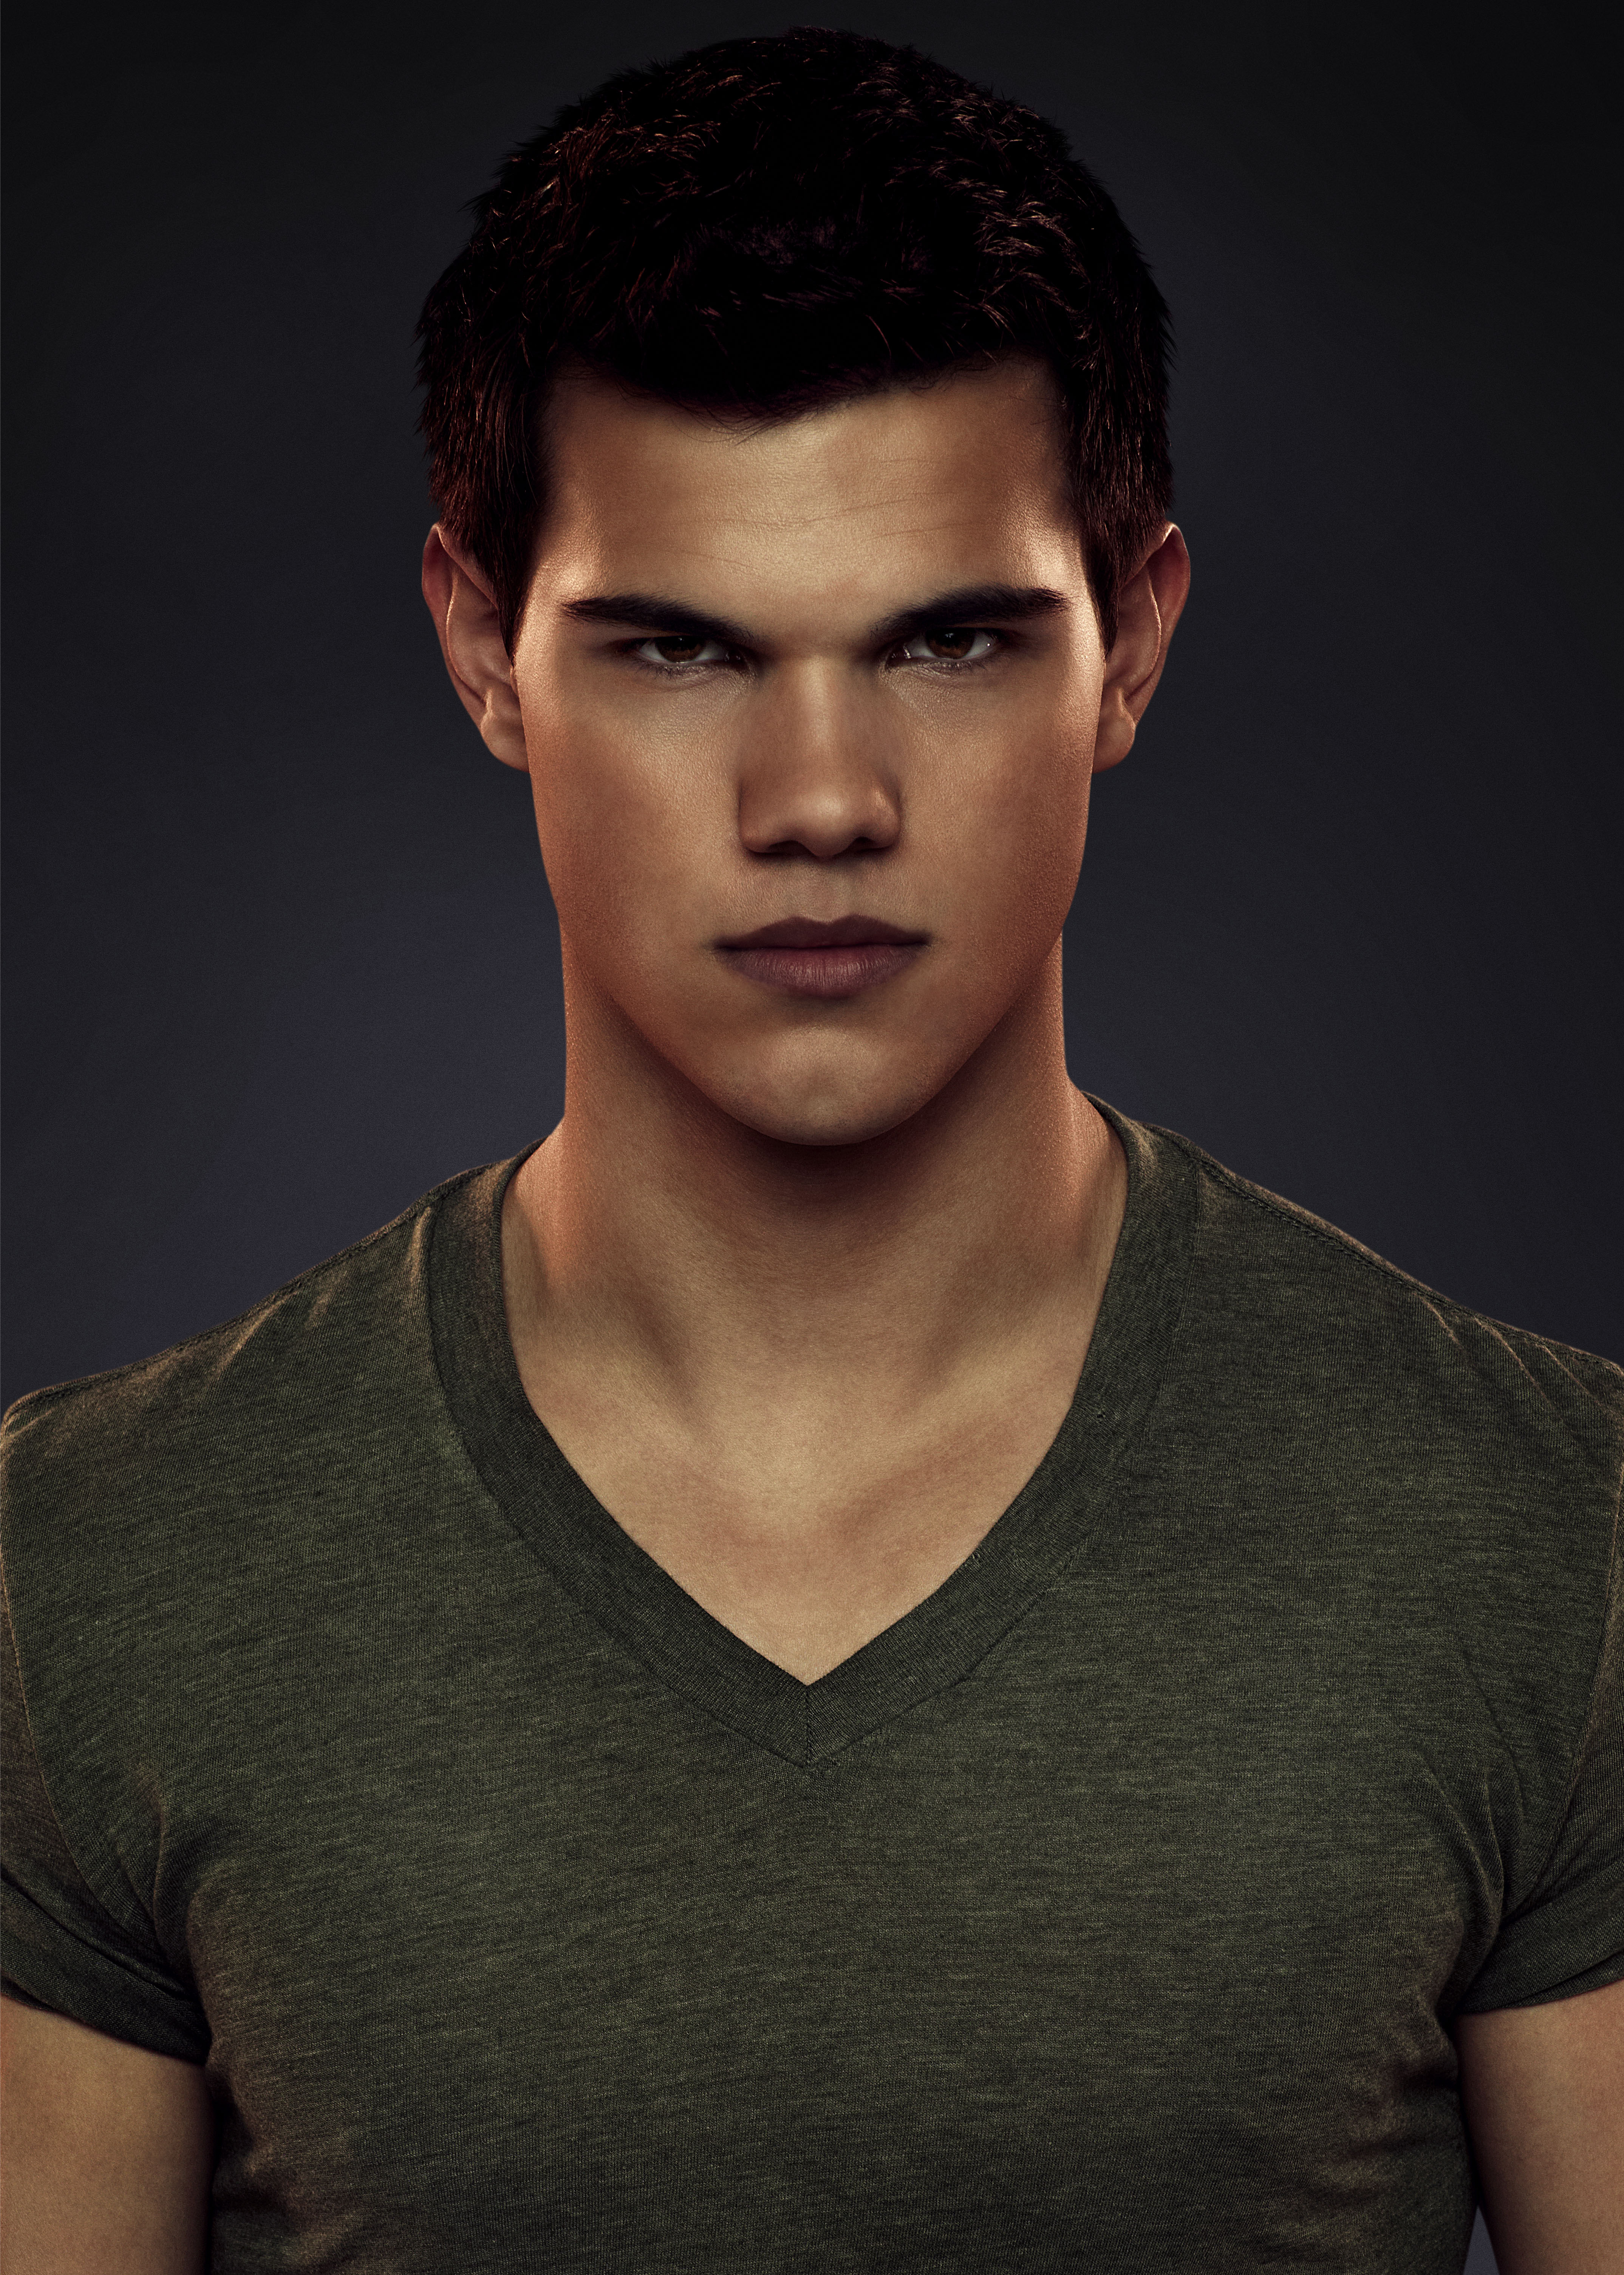 Taylor Lautner in The Twilight Saga: Breaking Dawn - Part 2